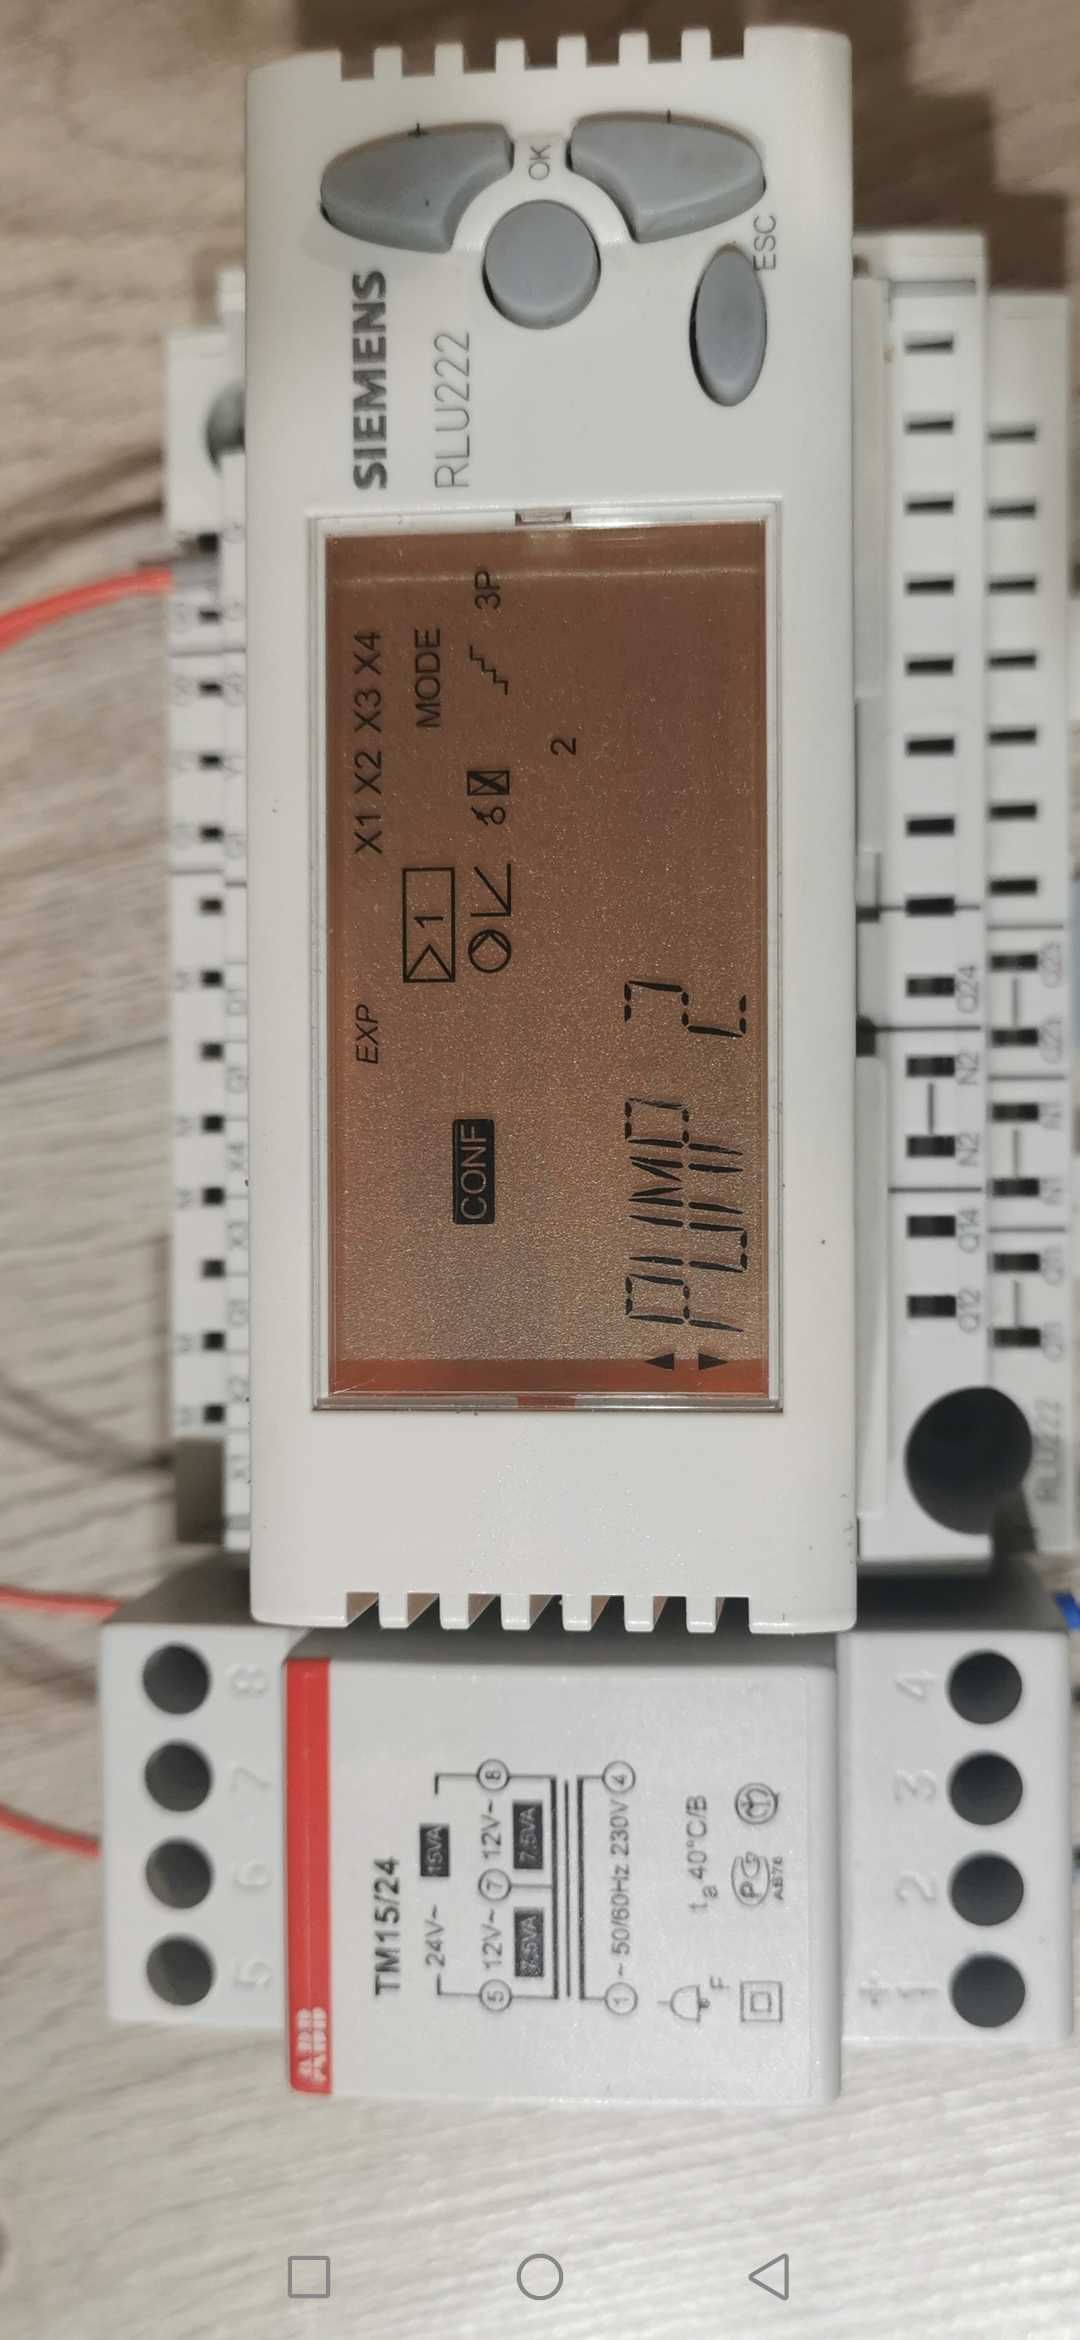 Контроллер плк реле температуры Siemens rlu 222  для вентиляции